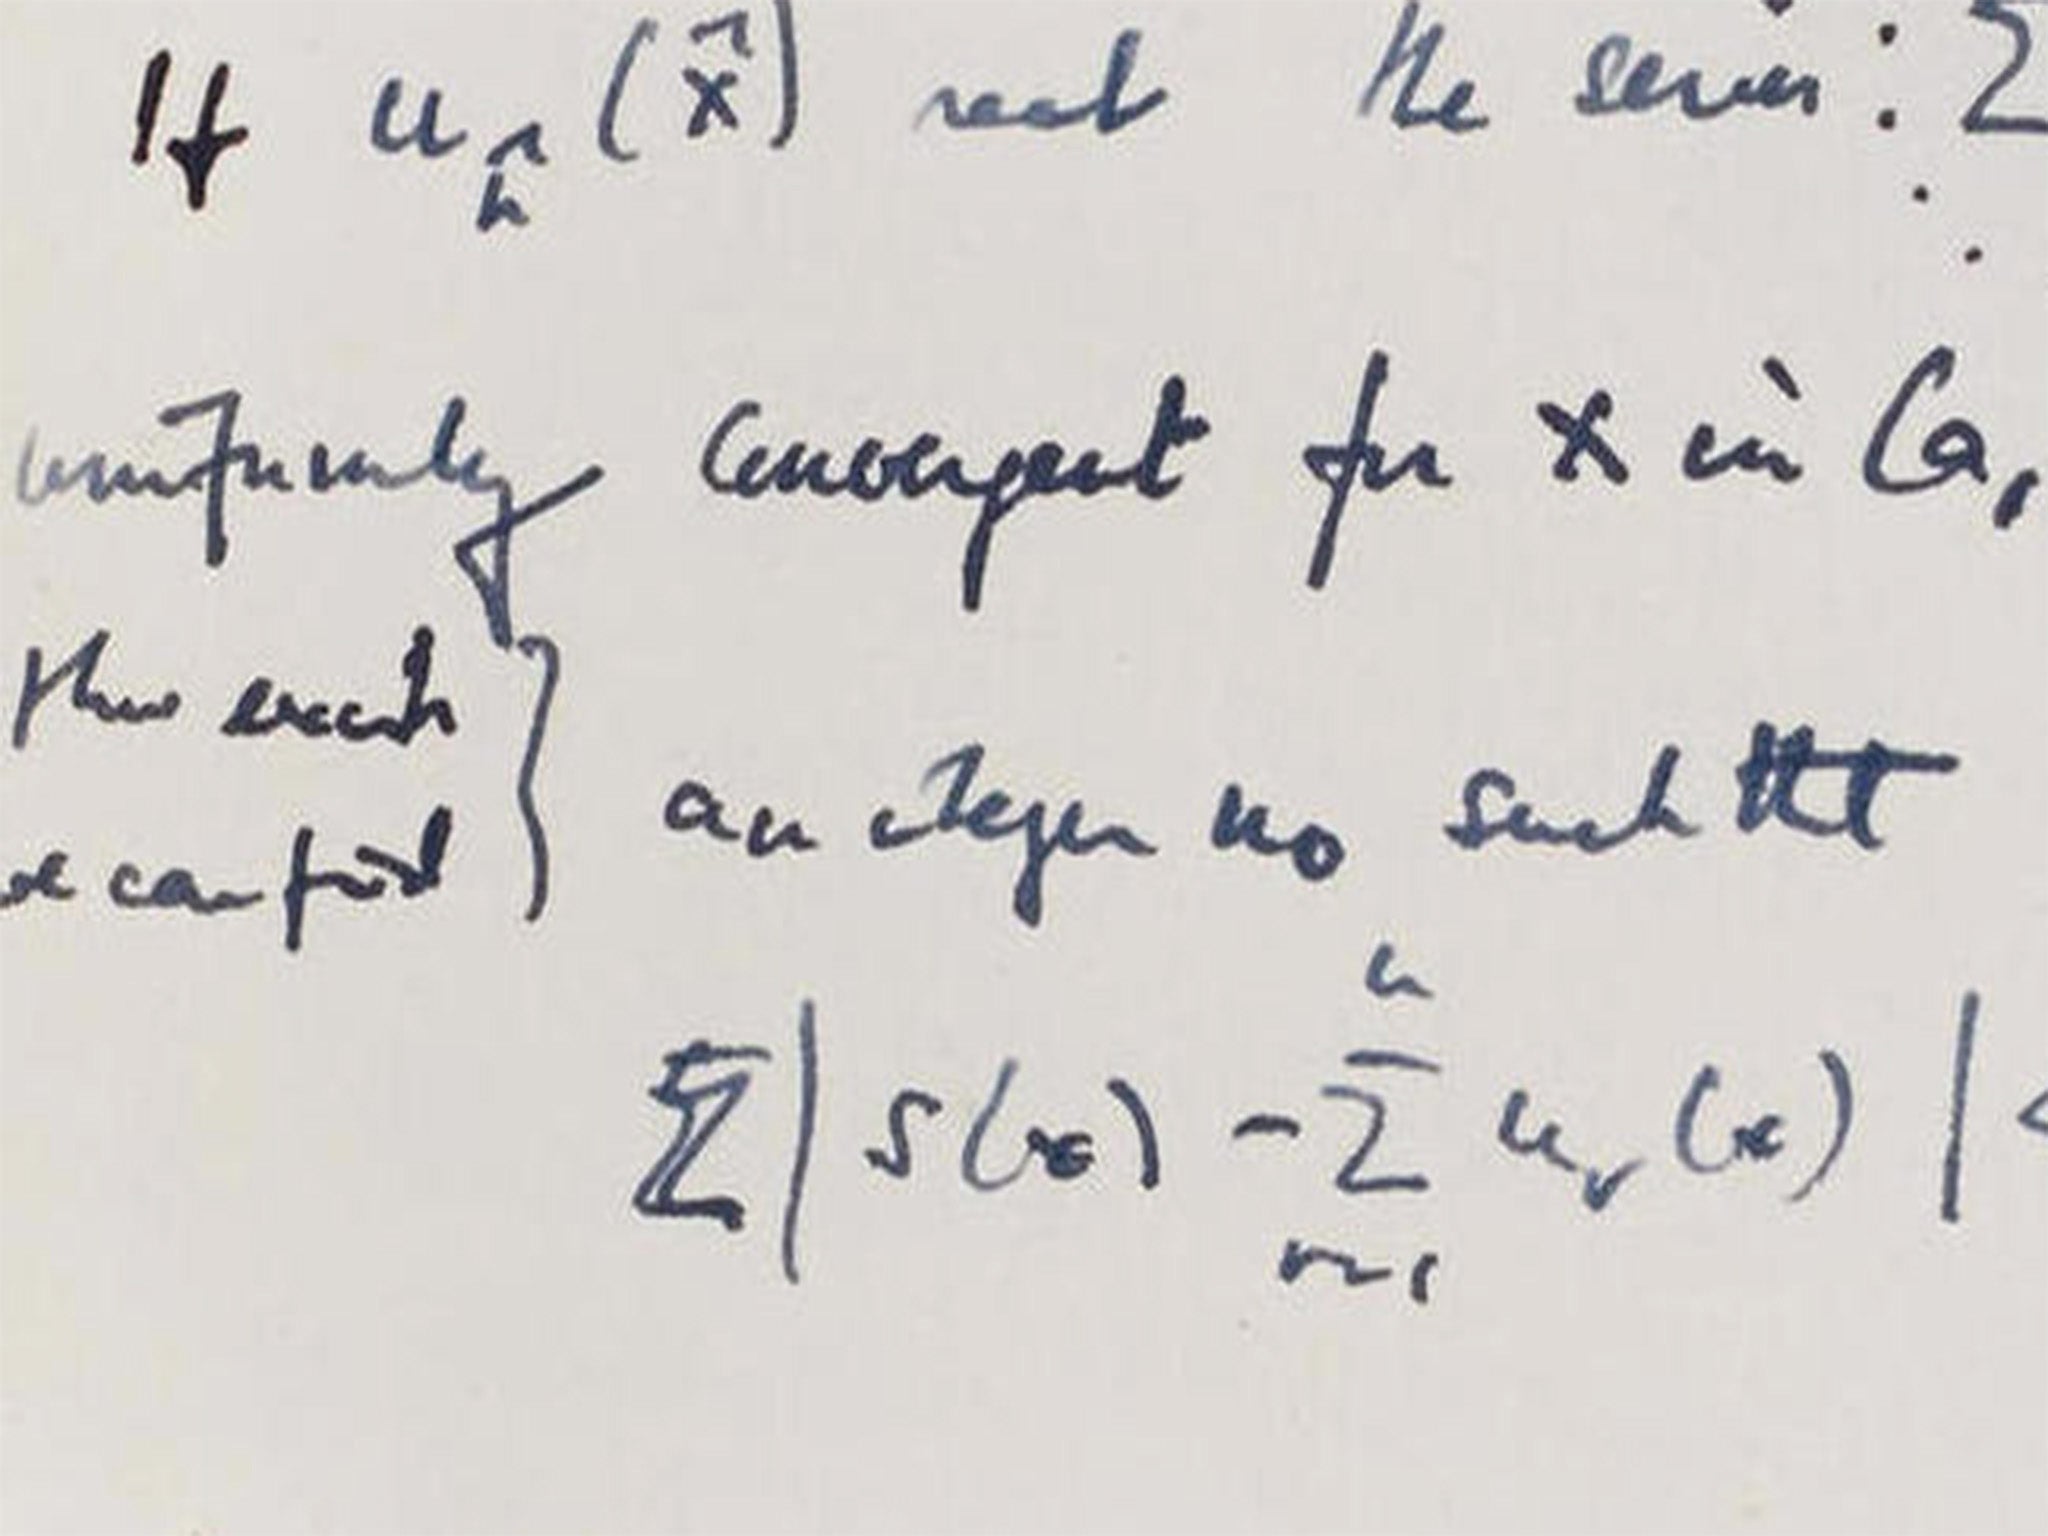 Alan Turing Handwritten Journal Of Enigma Code Breaker Sells For - alan turing handwritten journal of enigm!   a code breaker sells for more than 1m